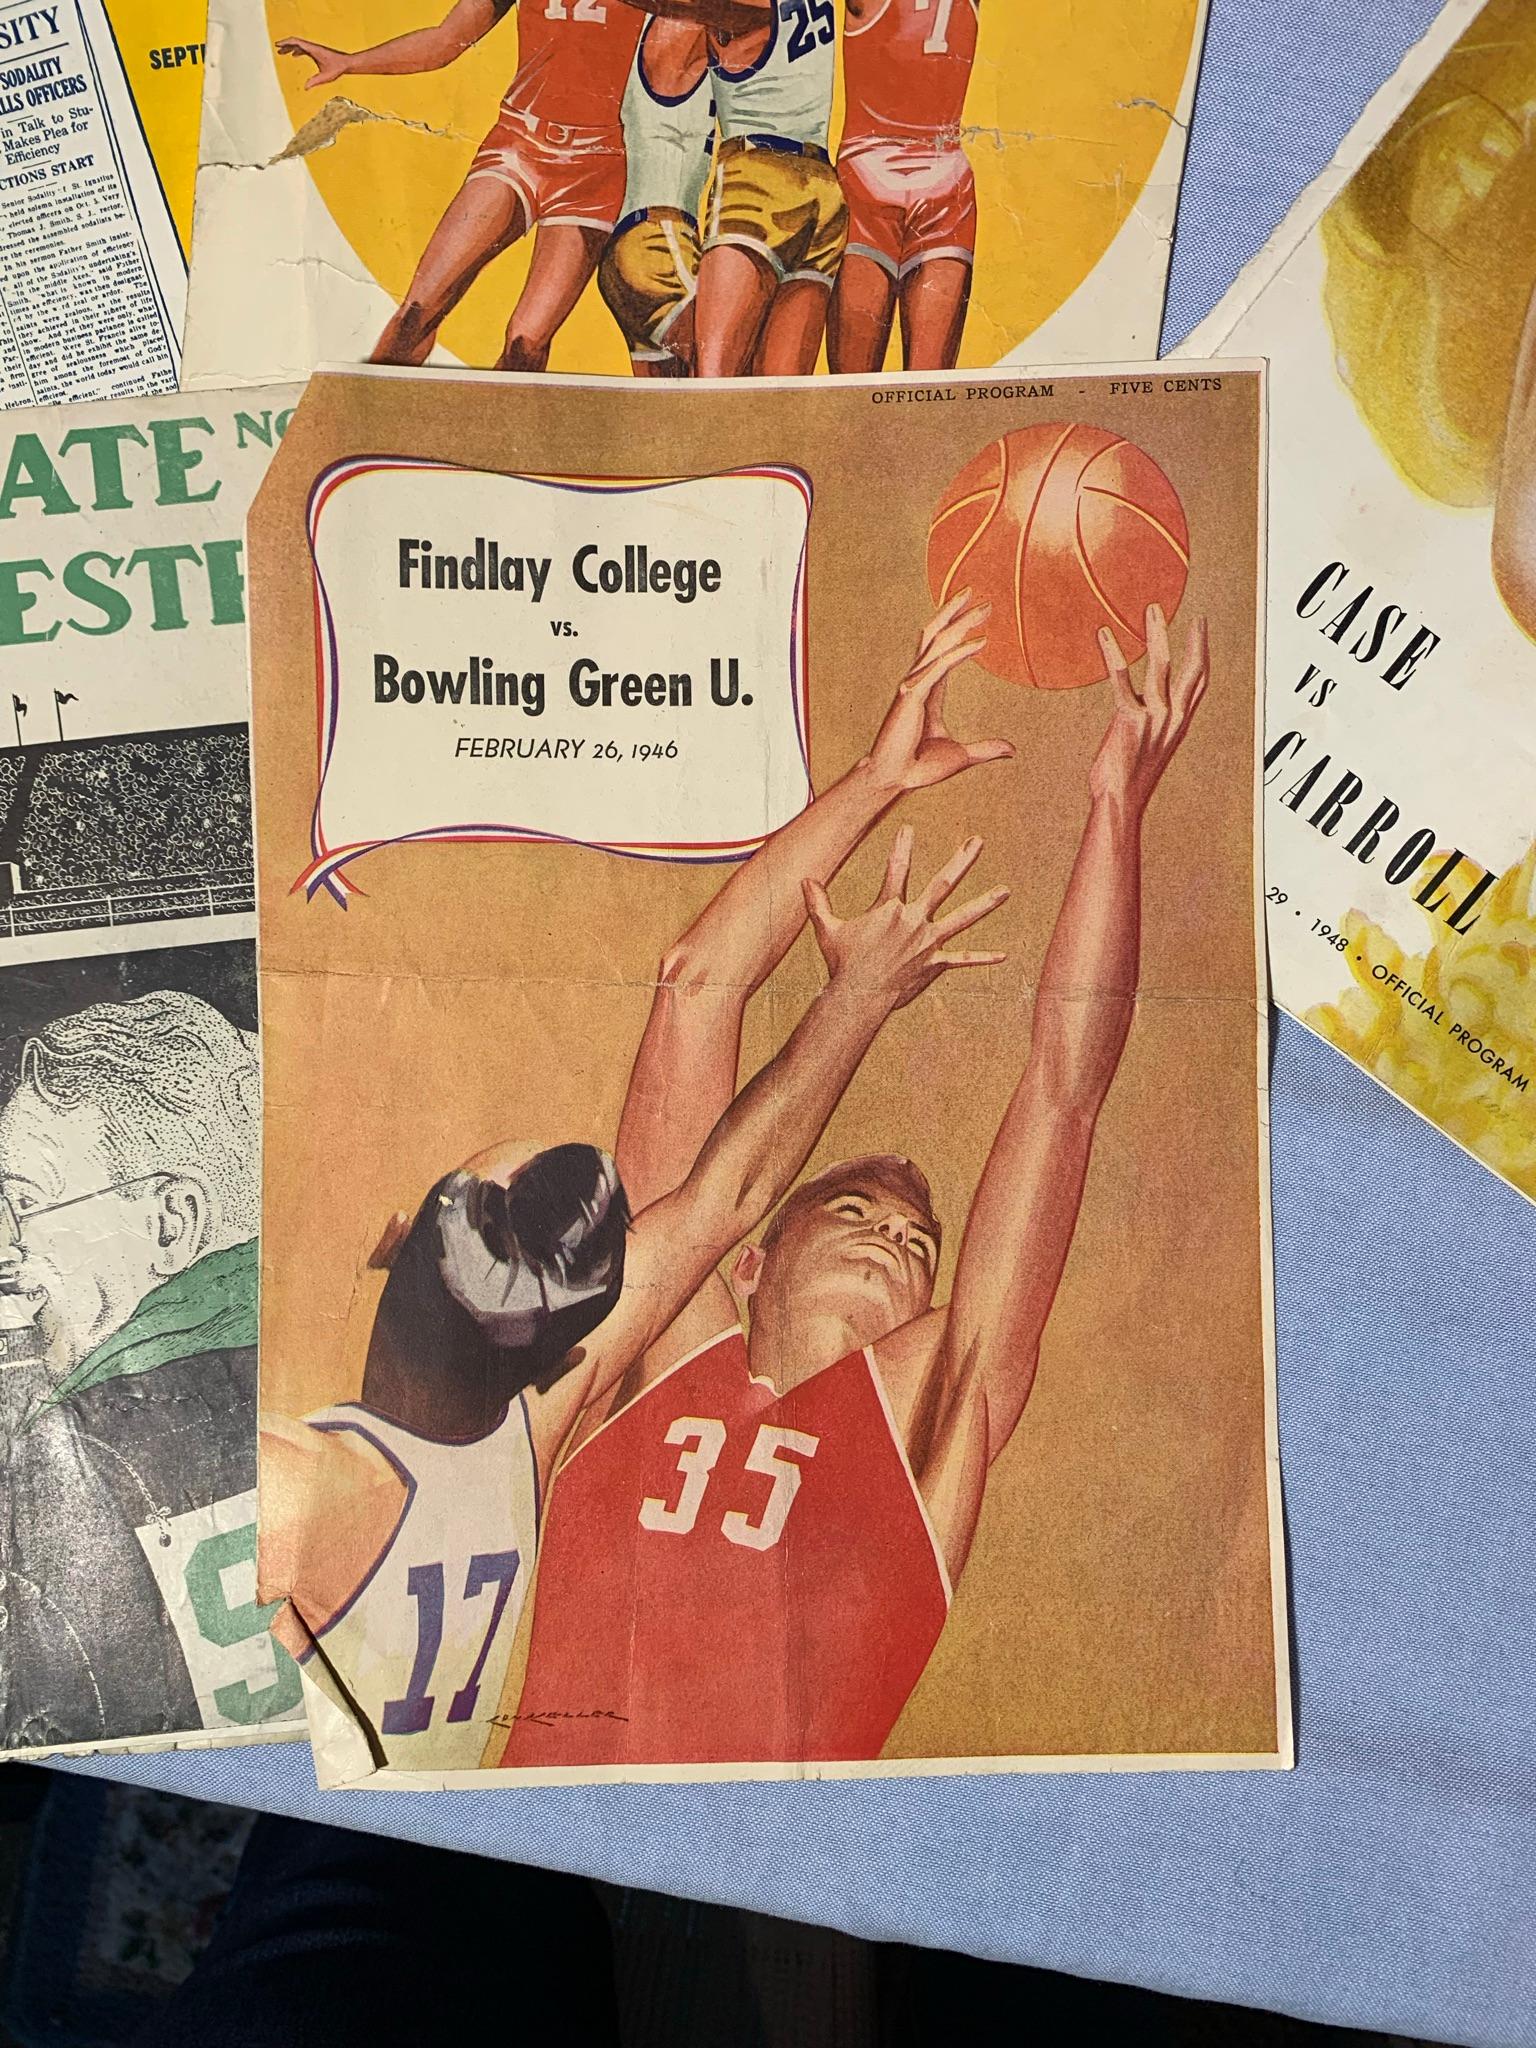 1948 Cleveland Arena Track Meet Brochure, 1946 Findlay College v Bowling Green Score Book